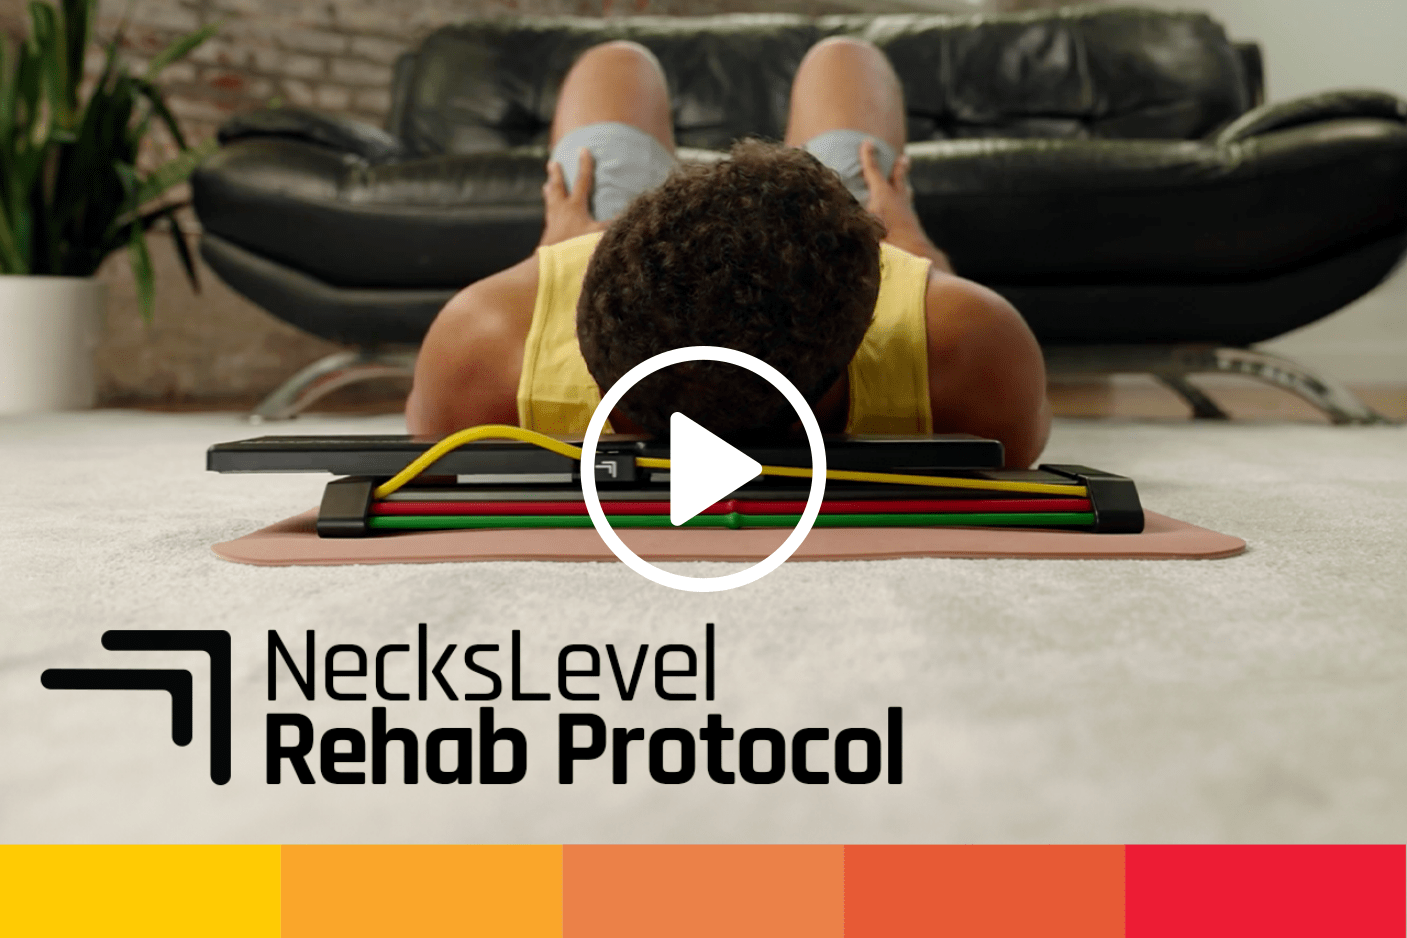 NecksLevel rehab protocol video thumbnail